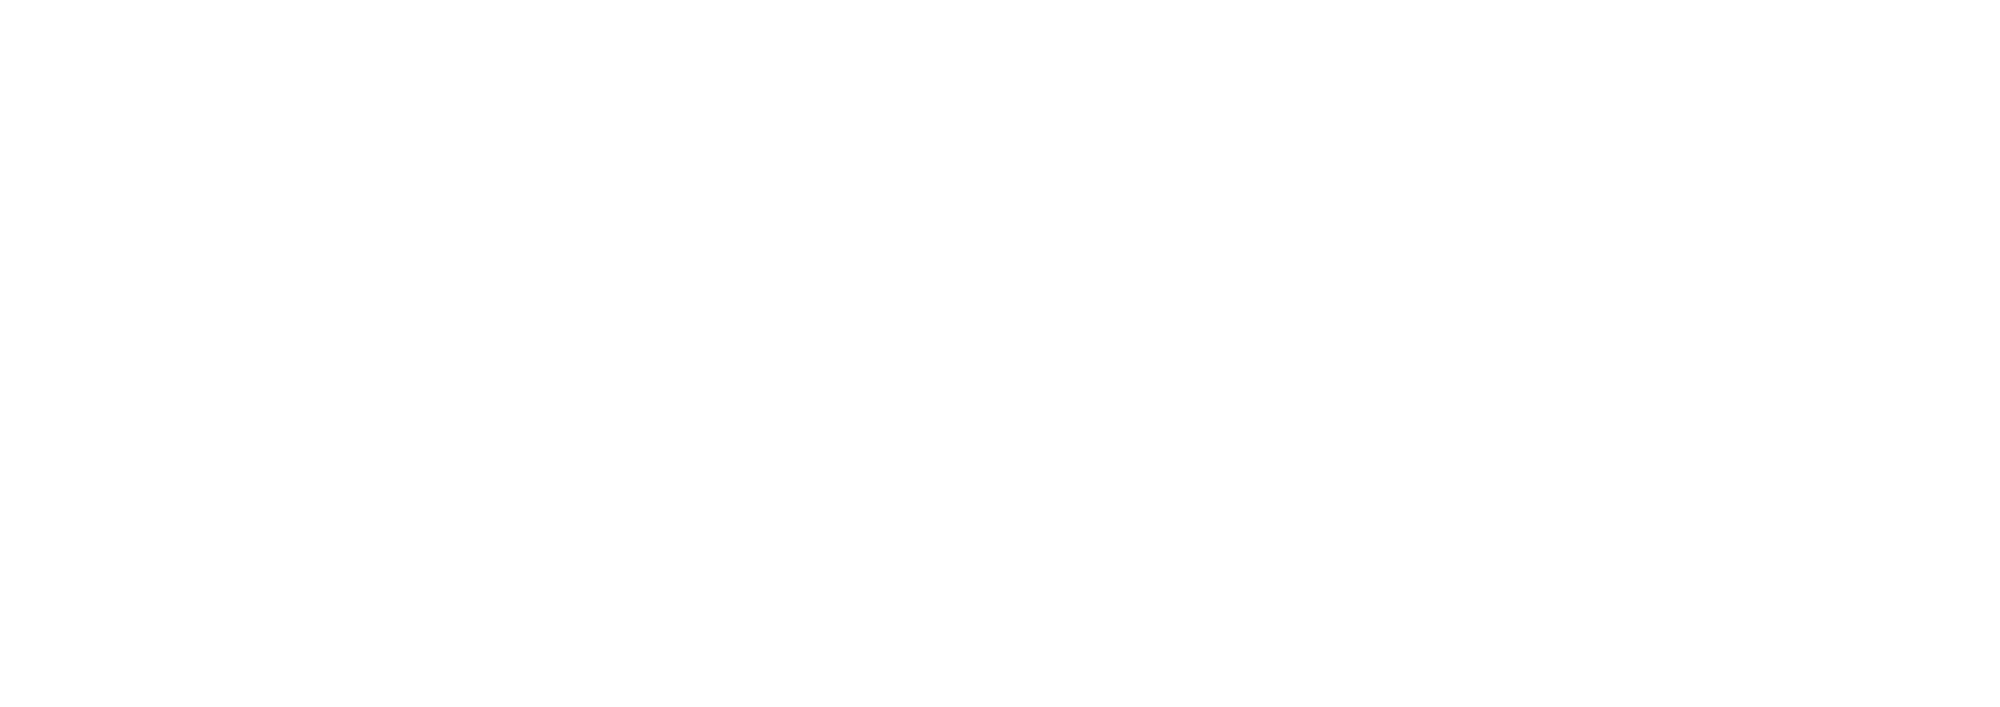 year-end-checklist-icon-pattern